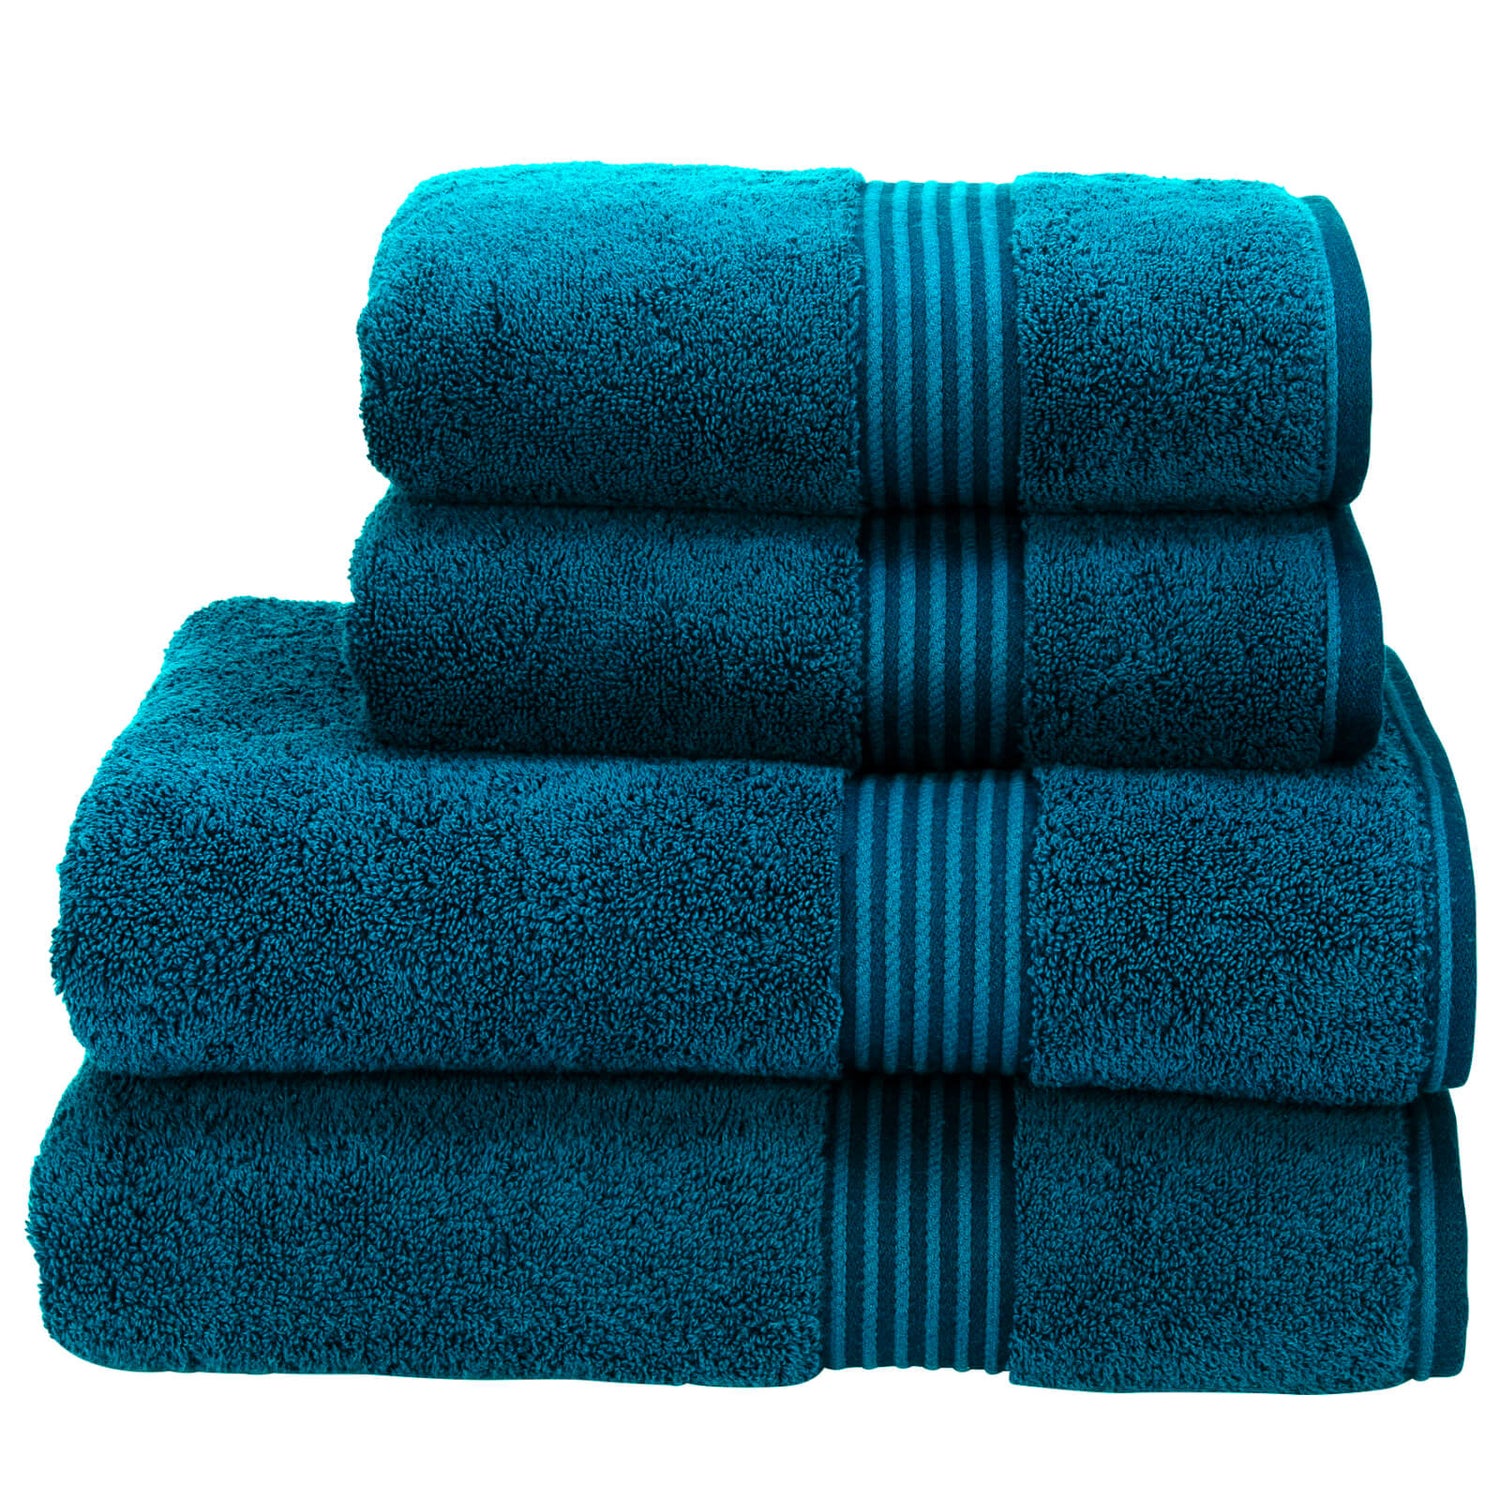 Christy Supreme Hygro Towel Range - Kingfisher - Hand Towel (Set of 2)